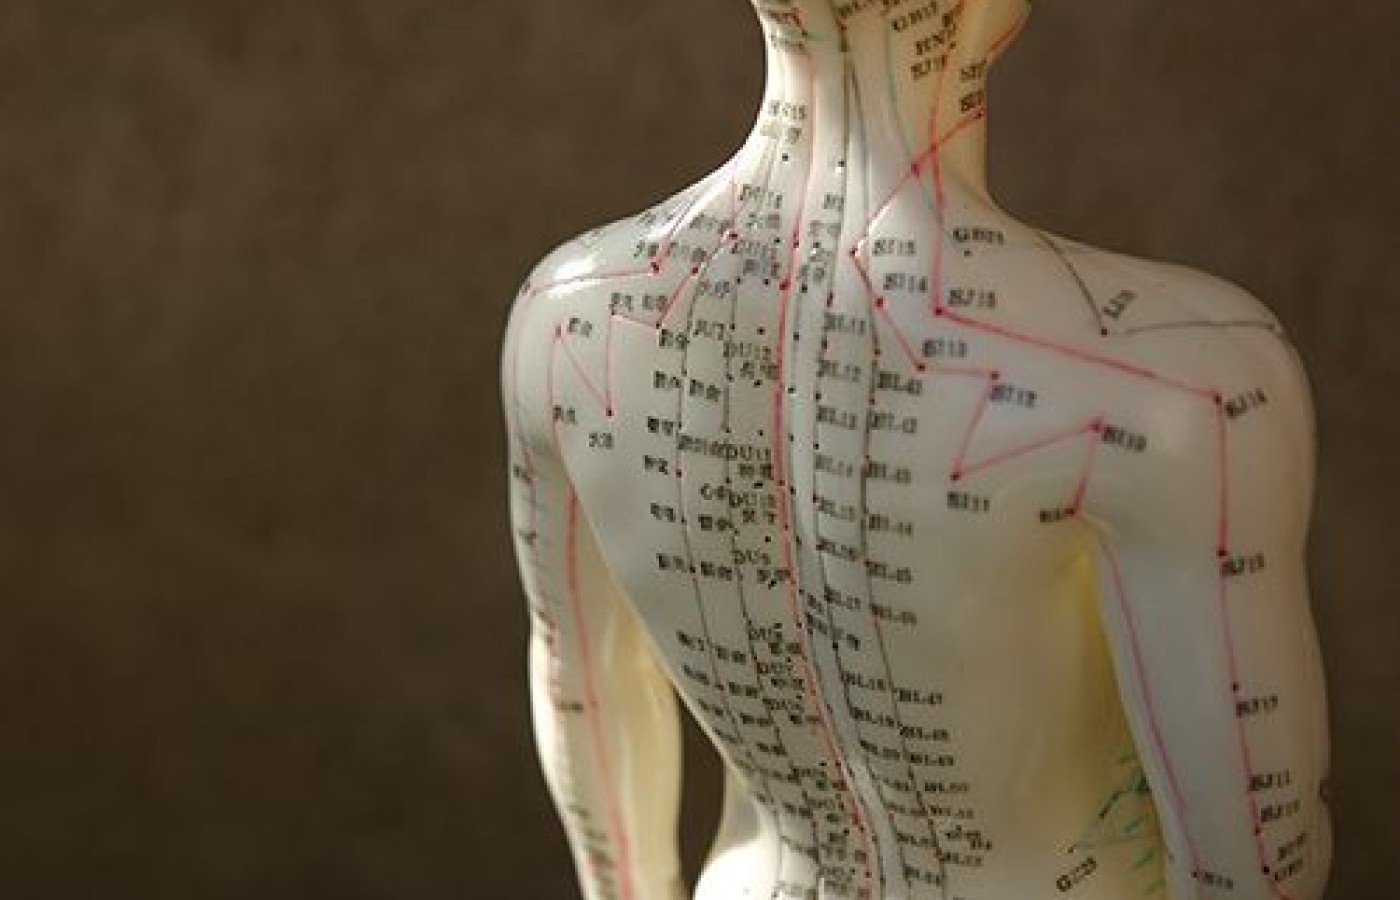 Standardizing Acupuncture?